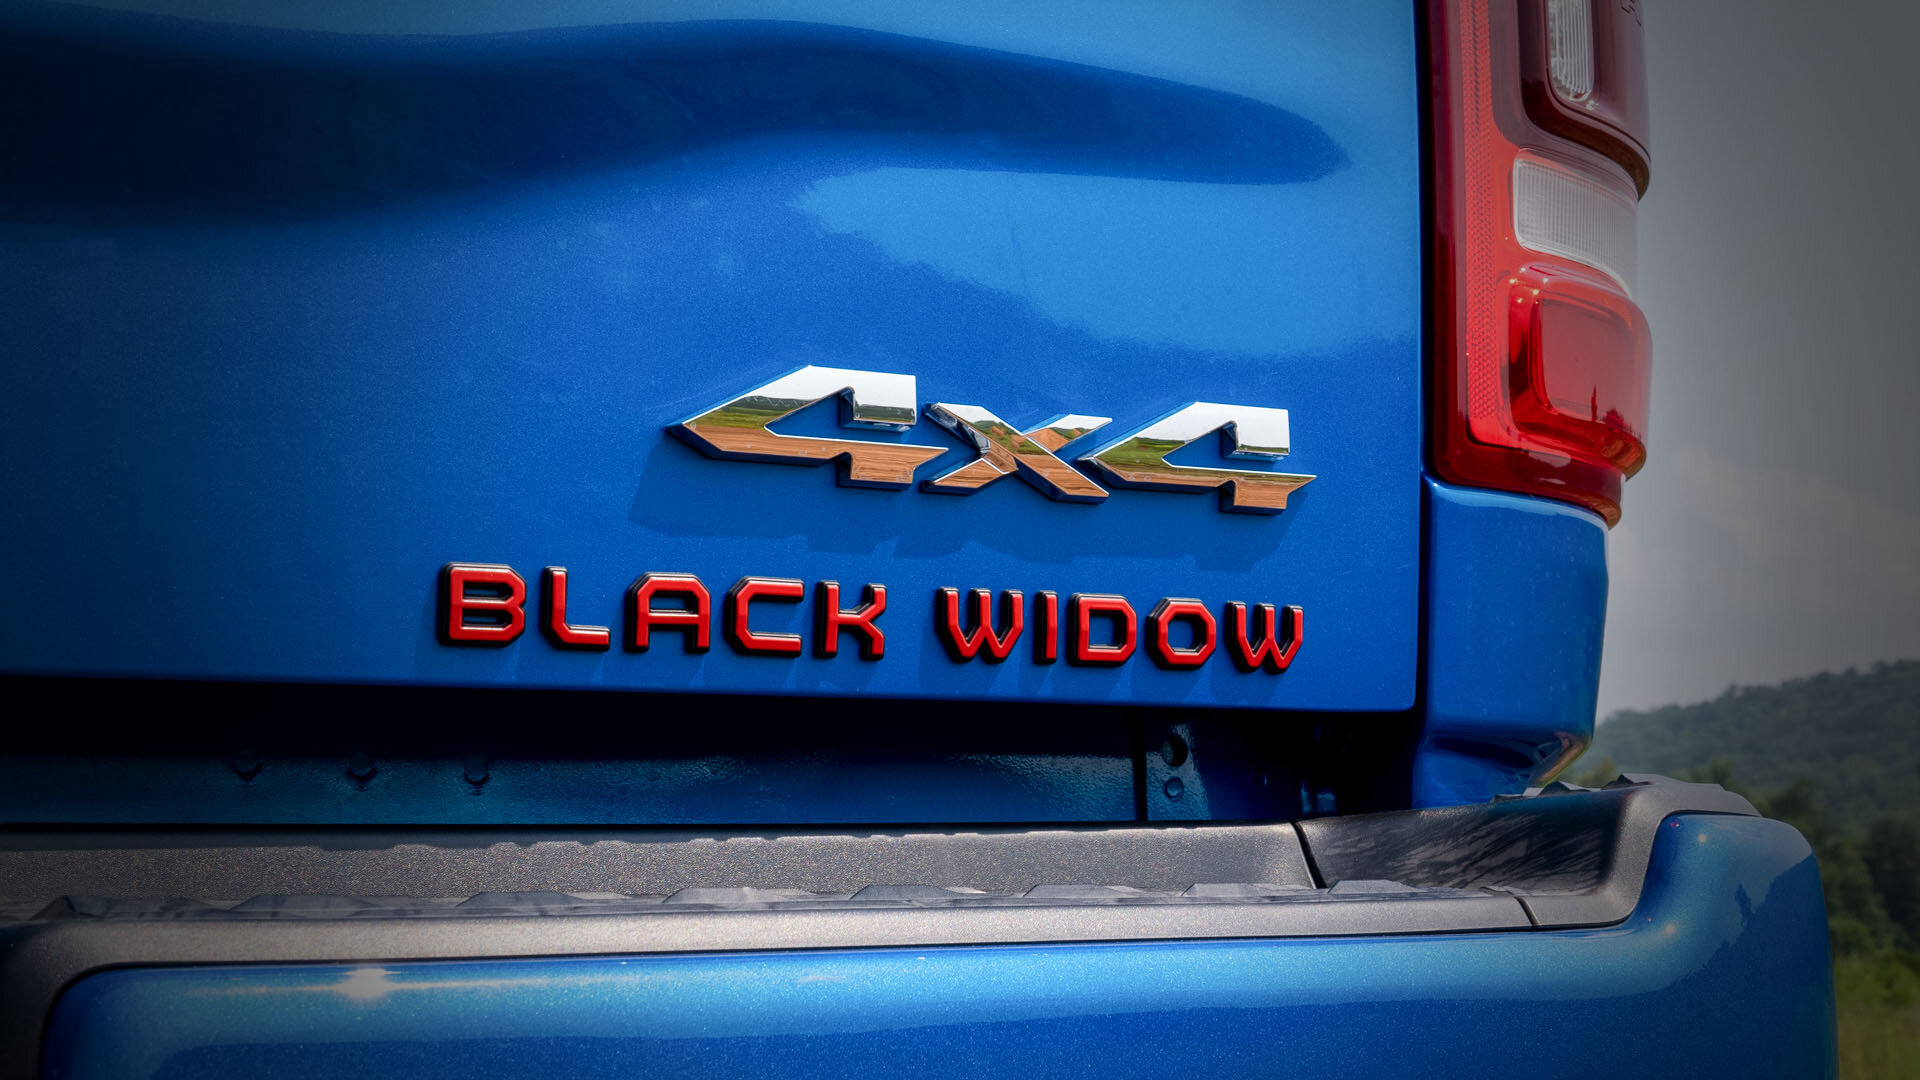 Black Widow badging